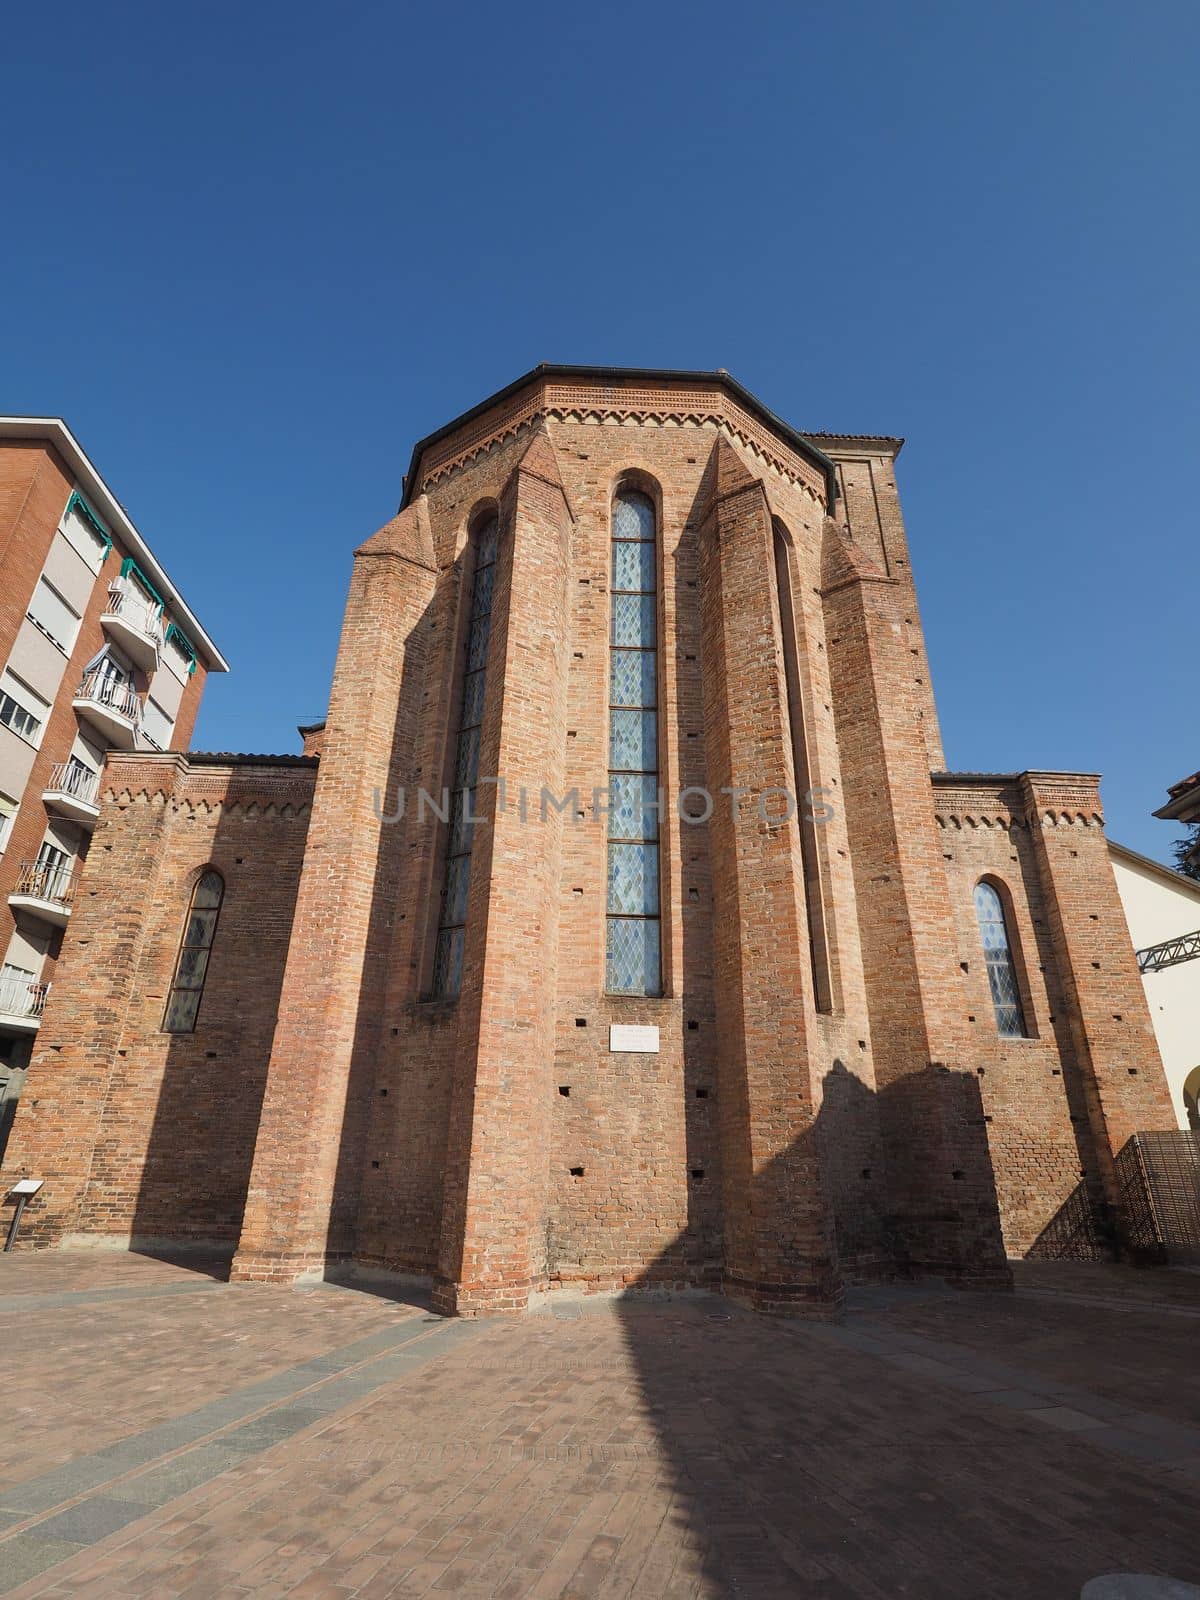 The San Domenico church in Alba, Italy